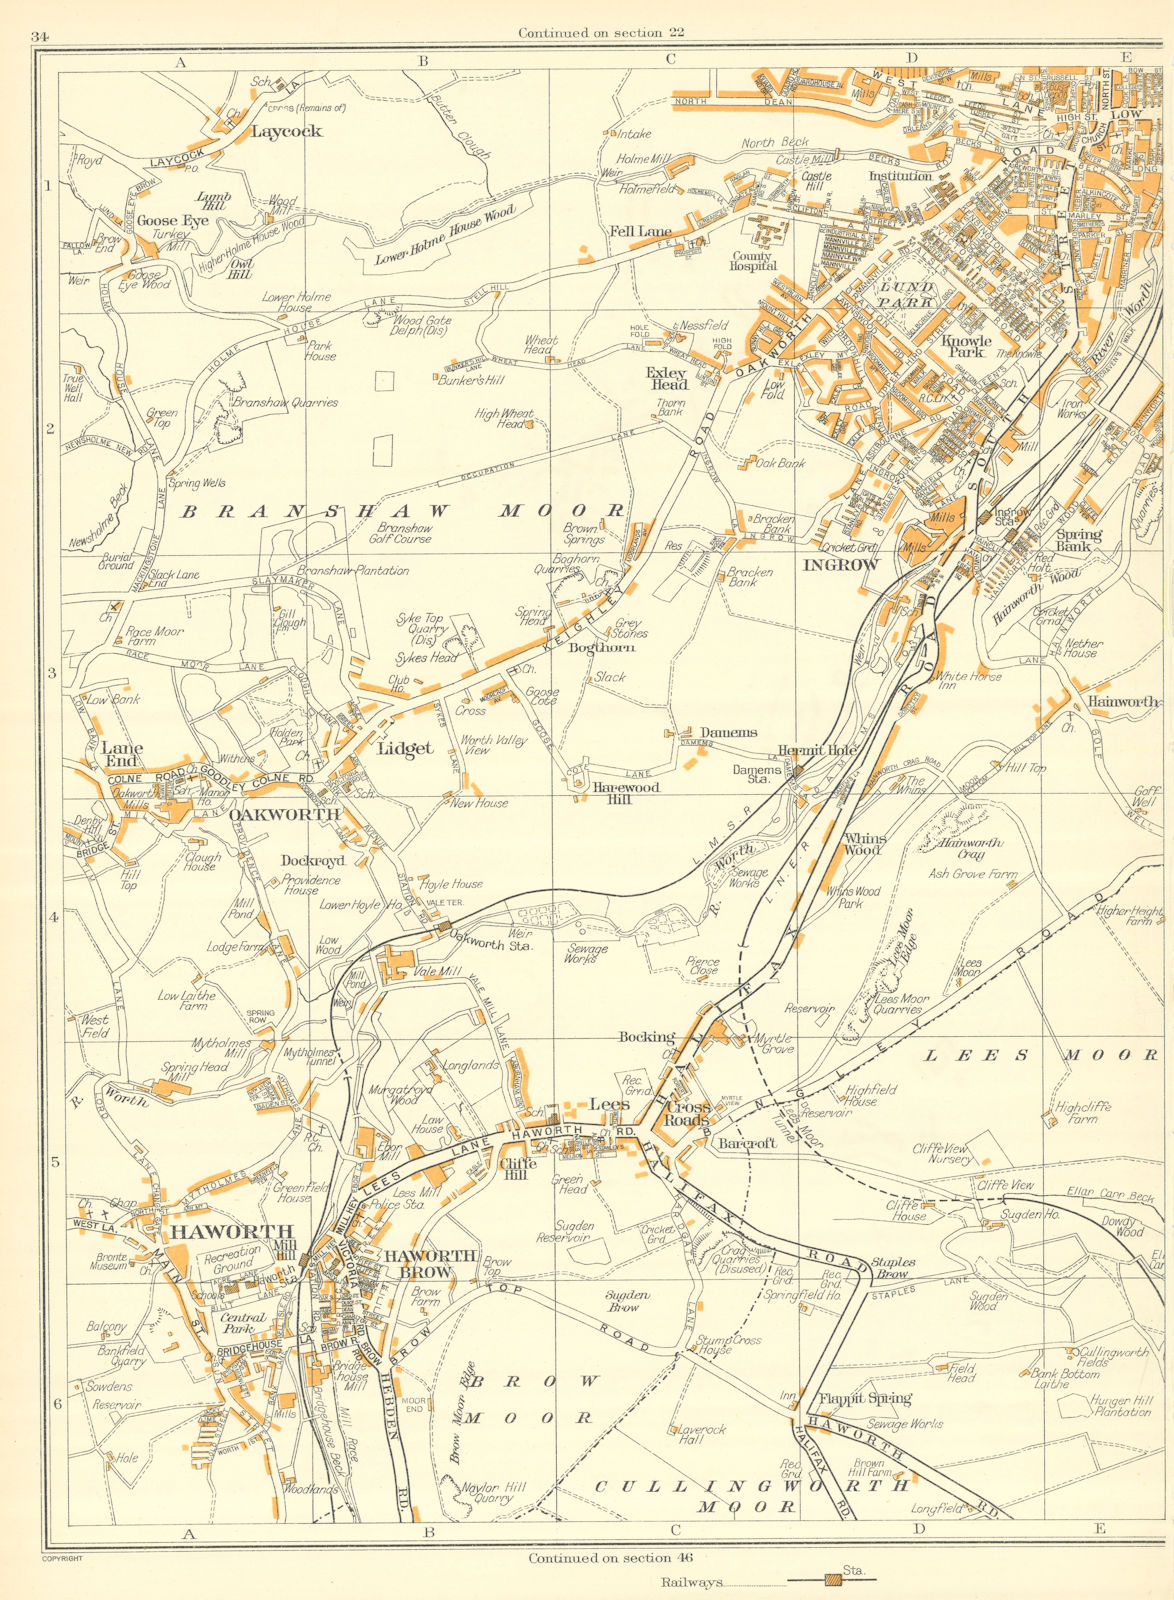 KEIGHLEY Branshaw Moor Lidget Ingrow Laycock Haworth Oakworth 1935 old map